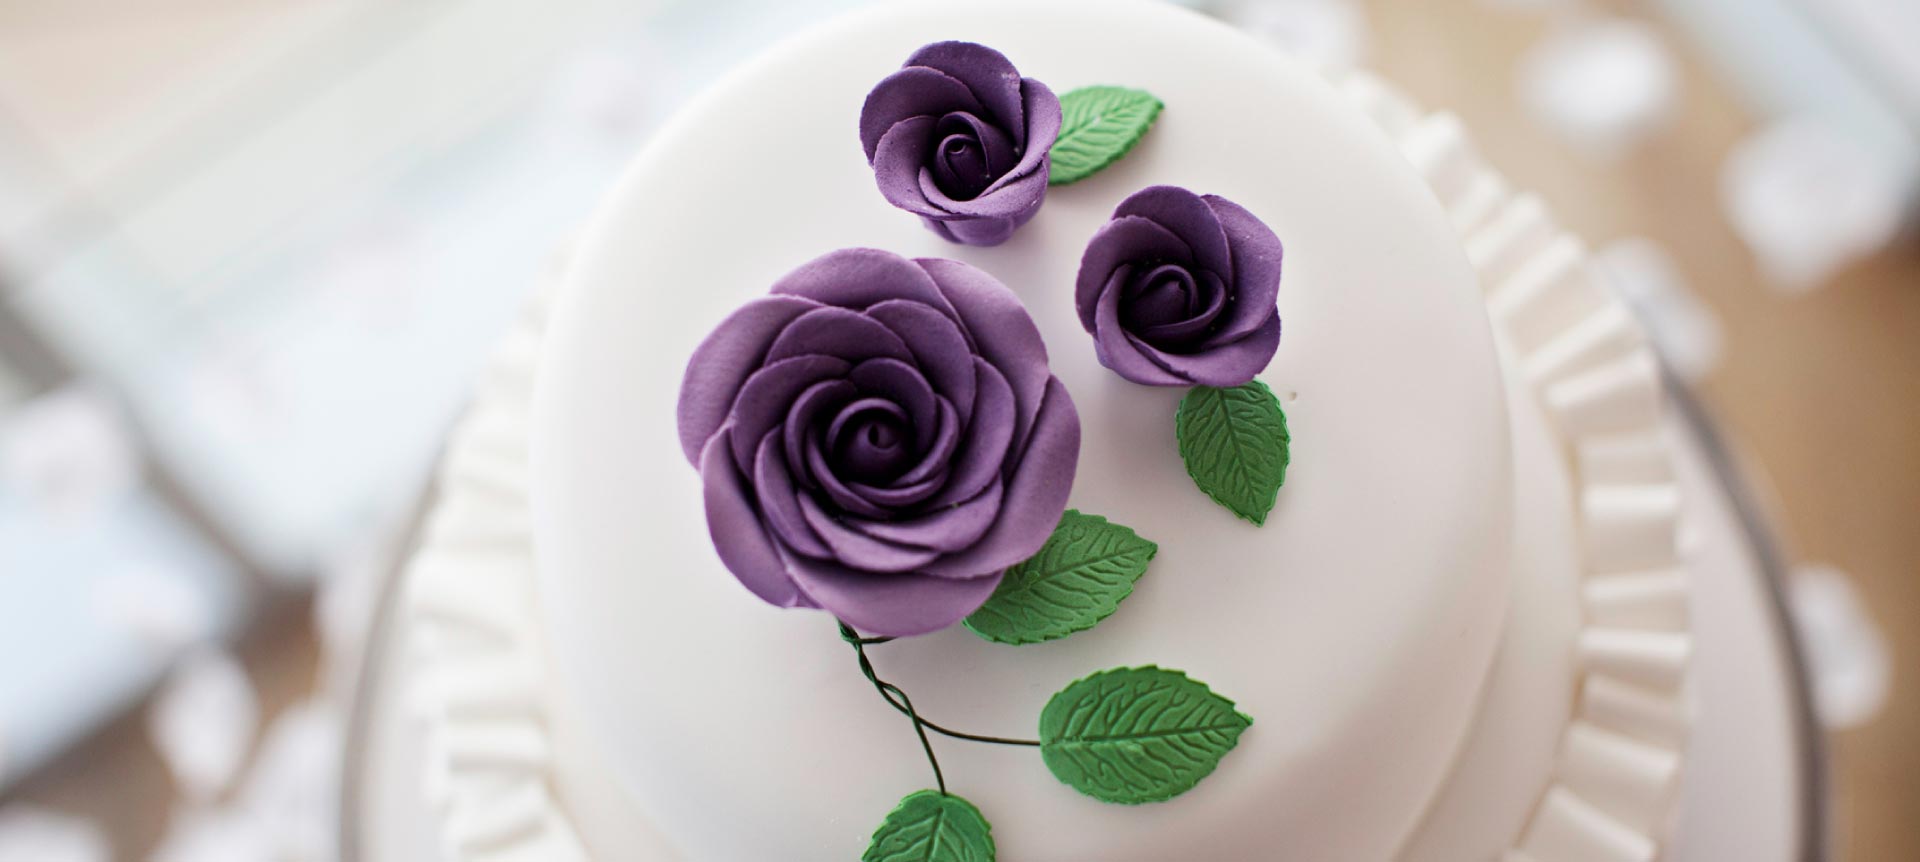 wedding cake with purple flower